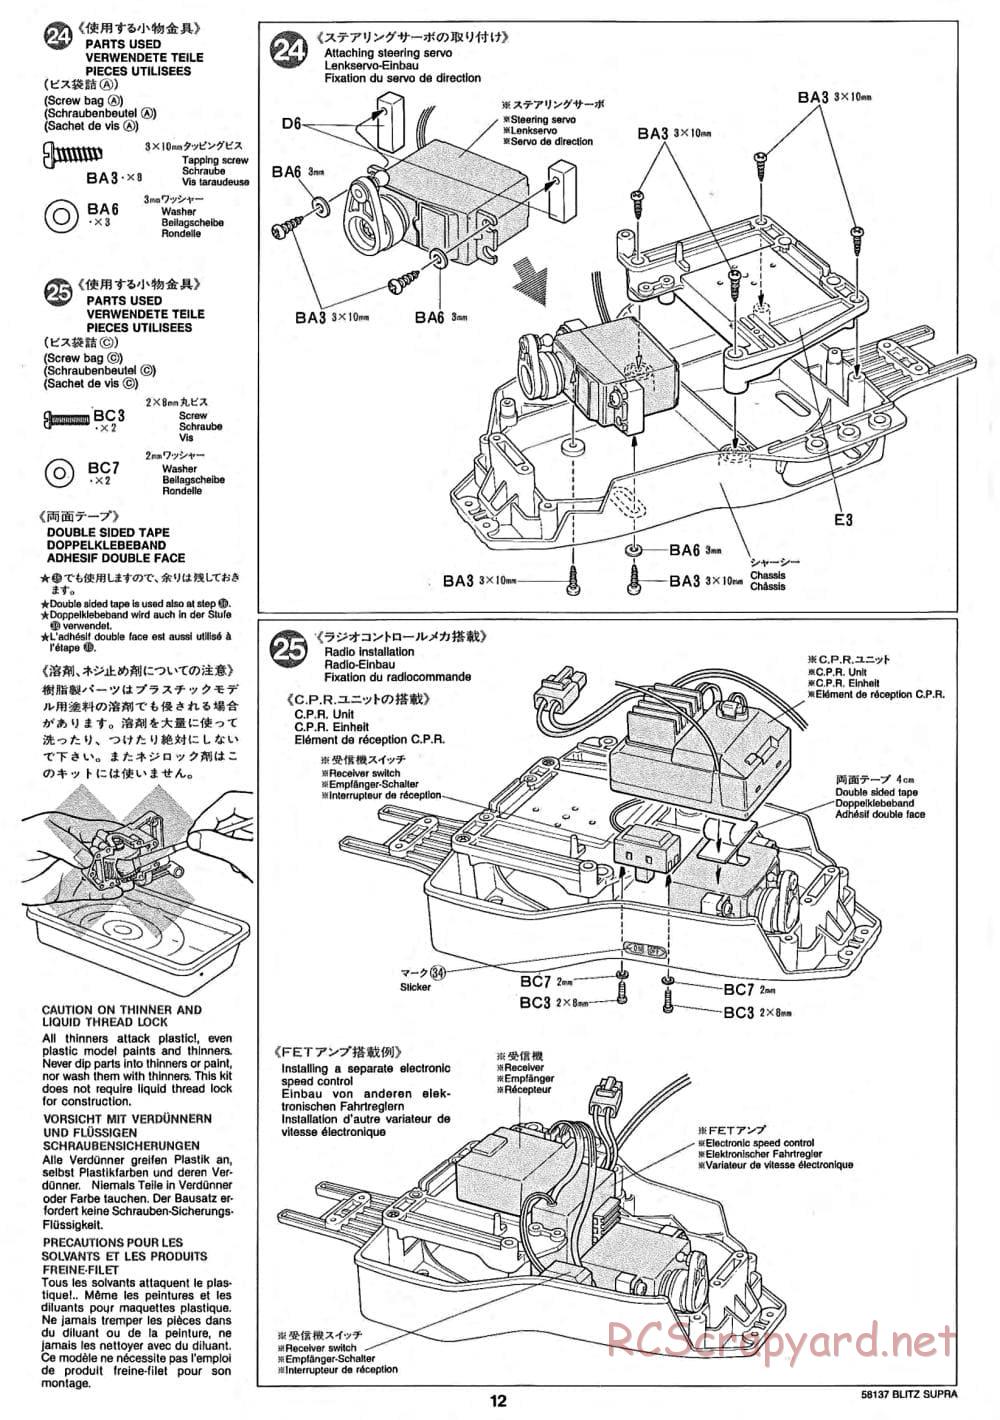 Tamiya - Blitz Toyota Supra Gr.N - TA-02 Chassis - Manual - Page 12